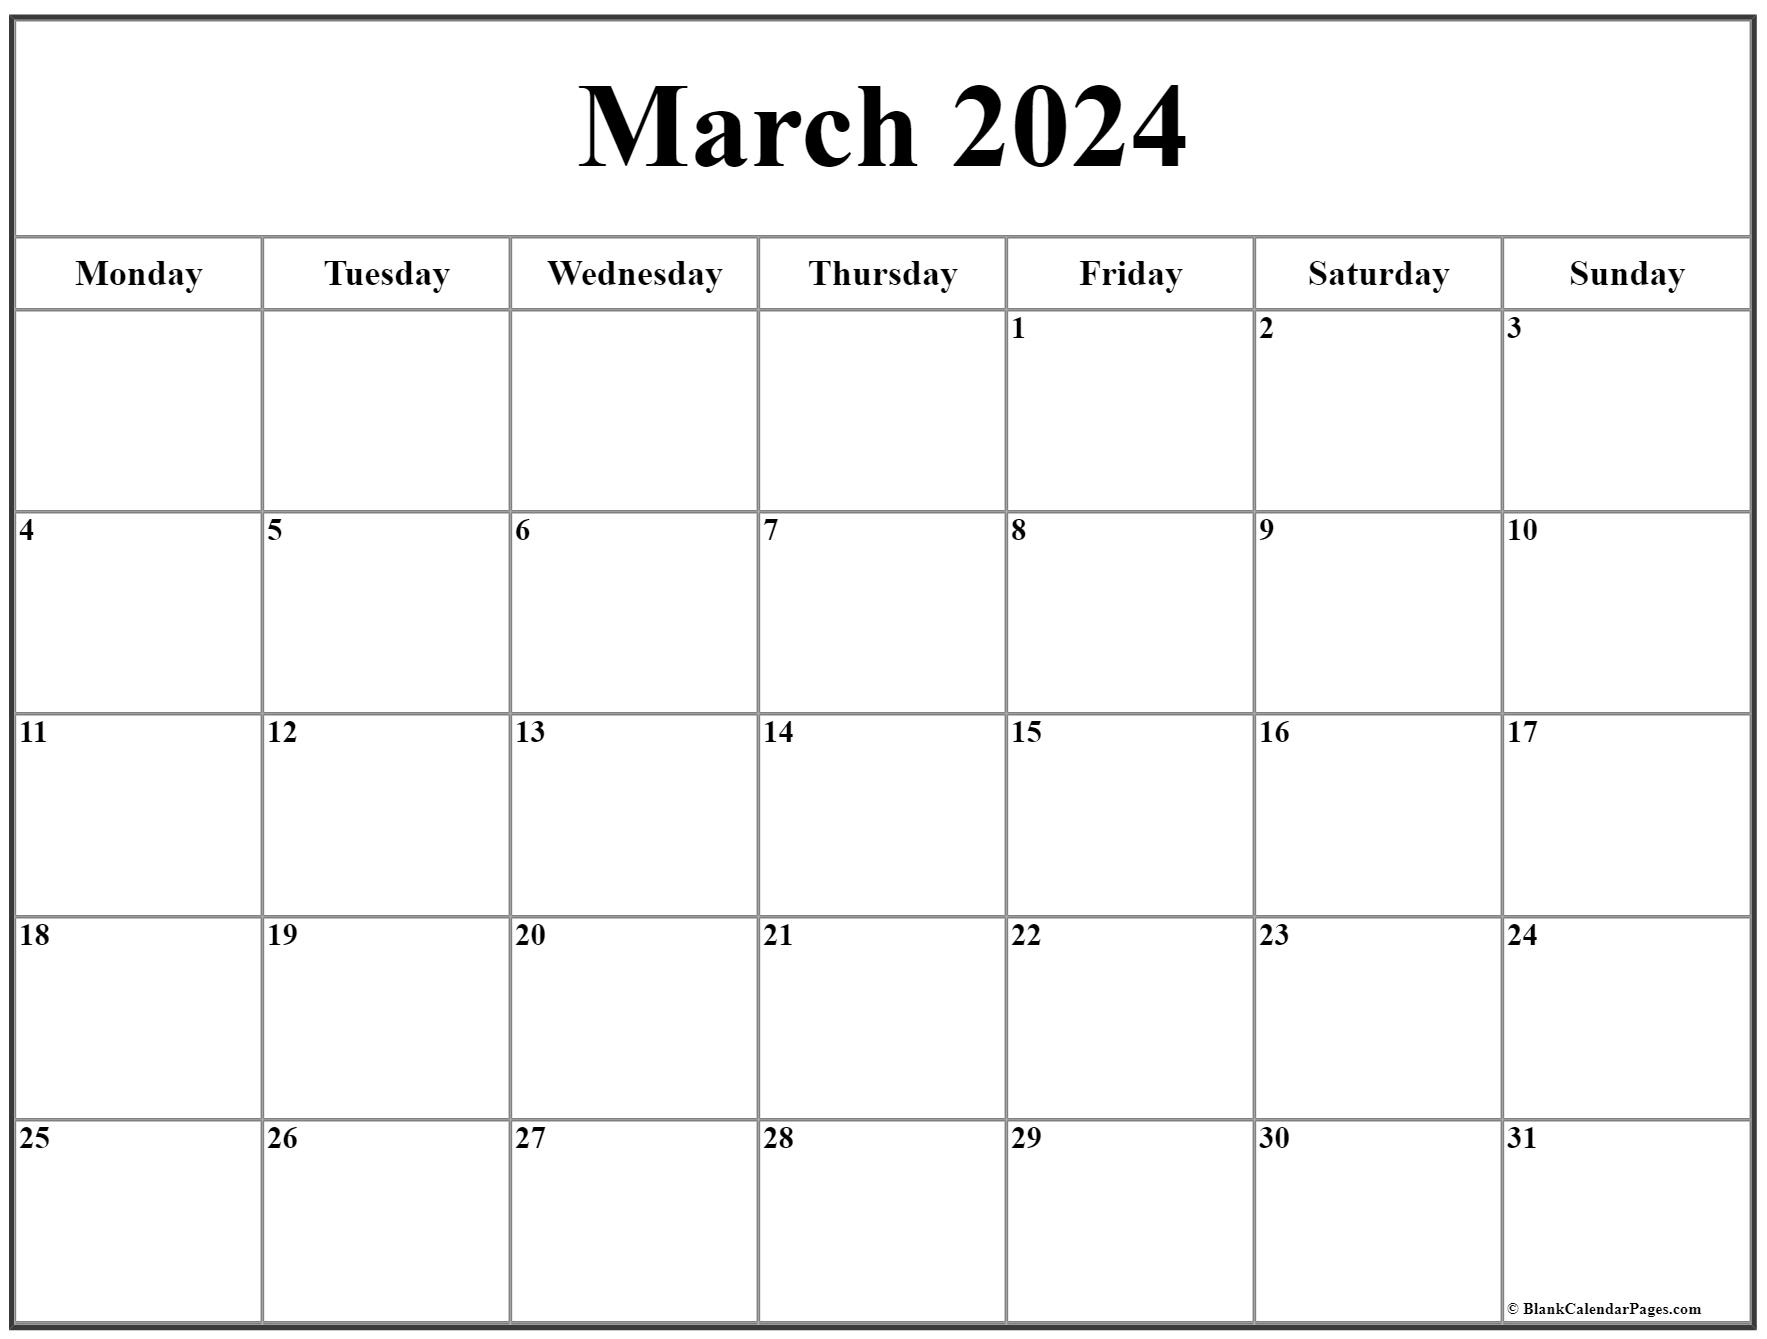 march 2021 calendar monday start March 2021 Monday Calendar Monday To Sunday march 2021 calendar monday start